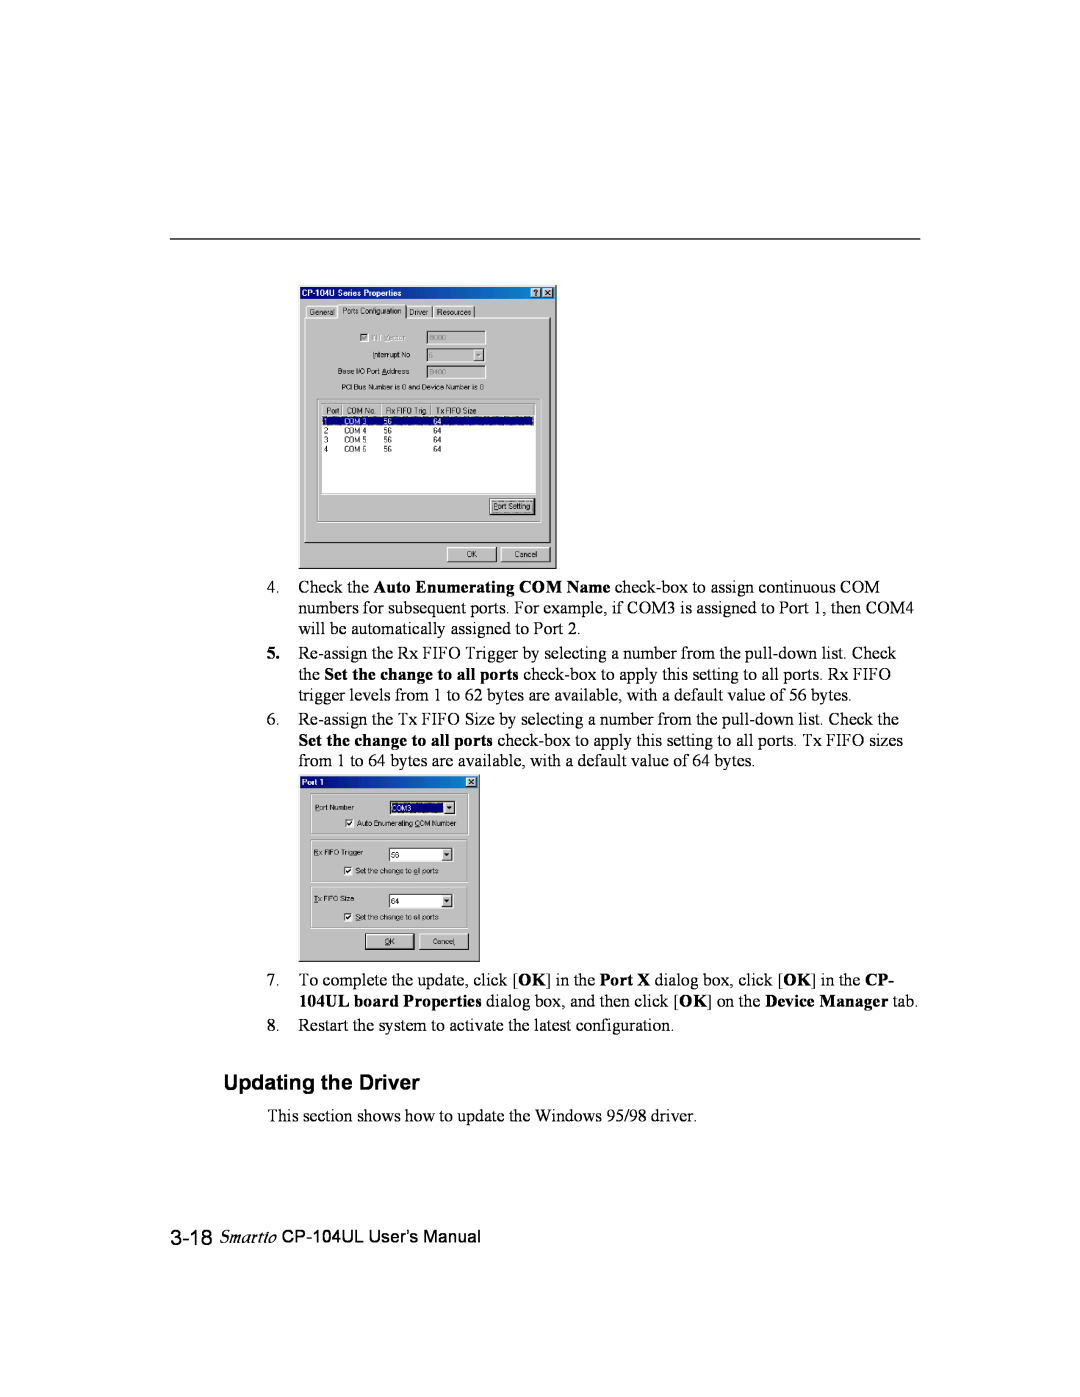 Moxa Technologies user manual Smartio CP-104UL User’s Manual 